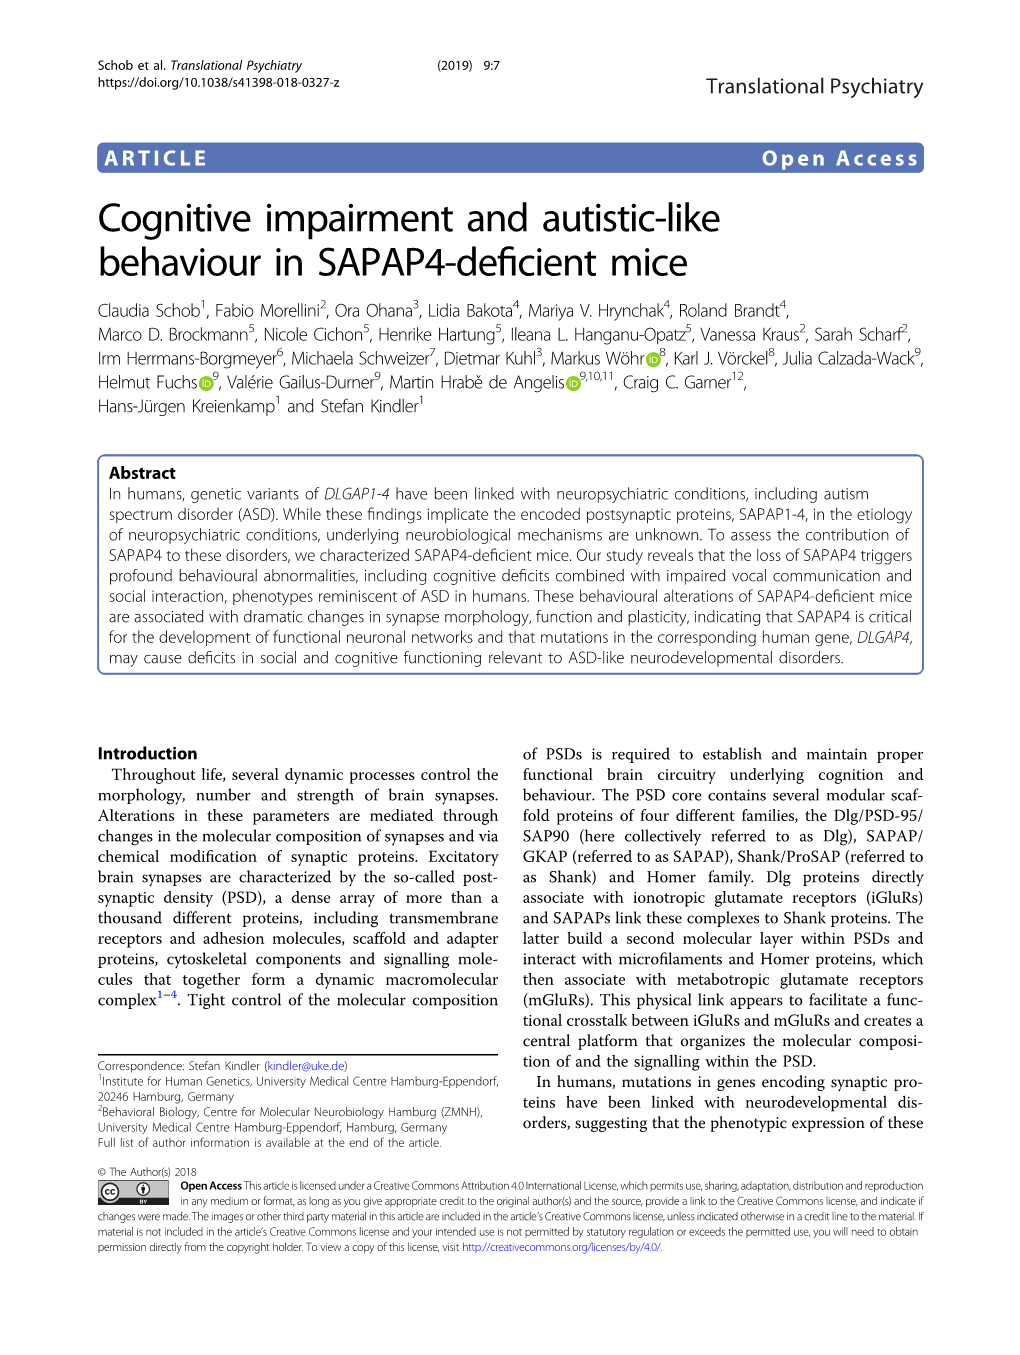 Cognitive Impairment and Autistic-Like Behaviour in SAPAP4-Deficient Mice